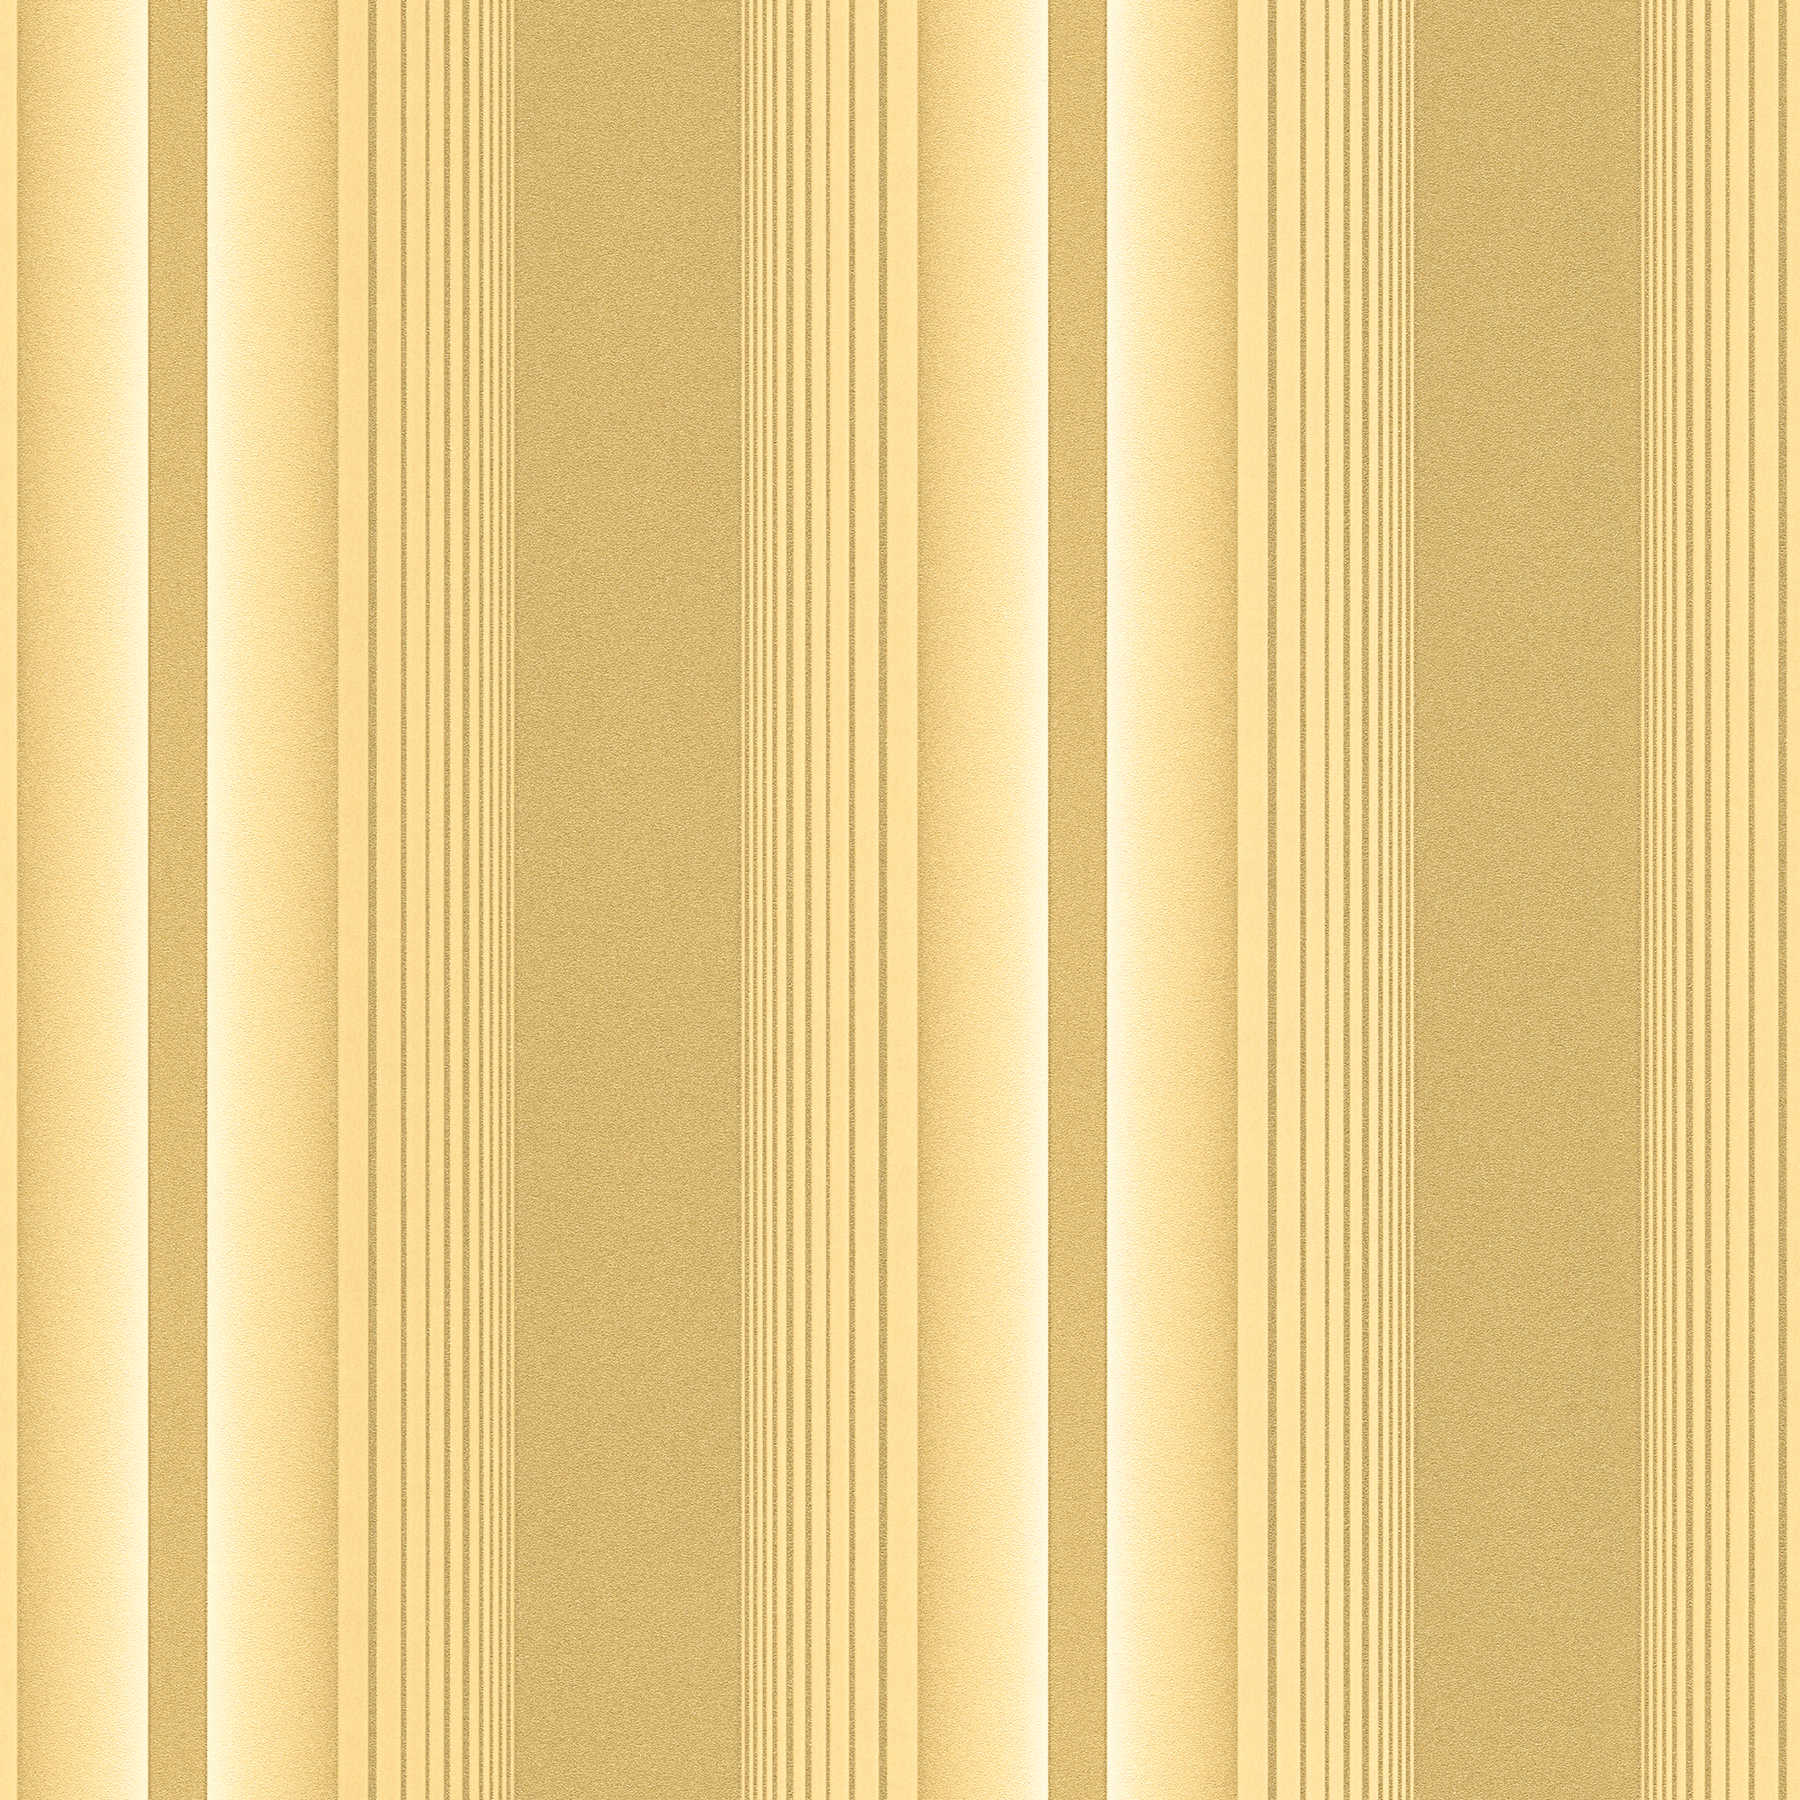 Golden wallpaper with stripe pattern, elegant & opulent
